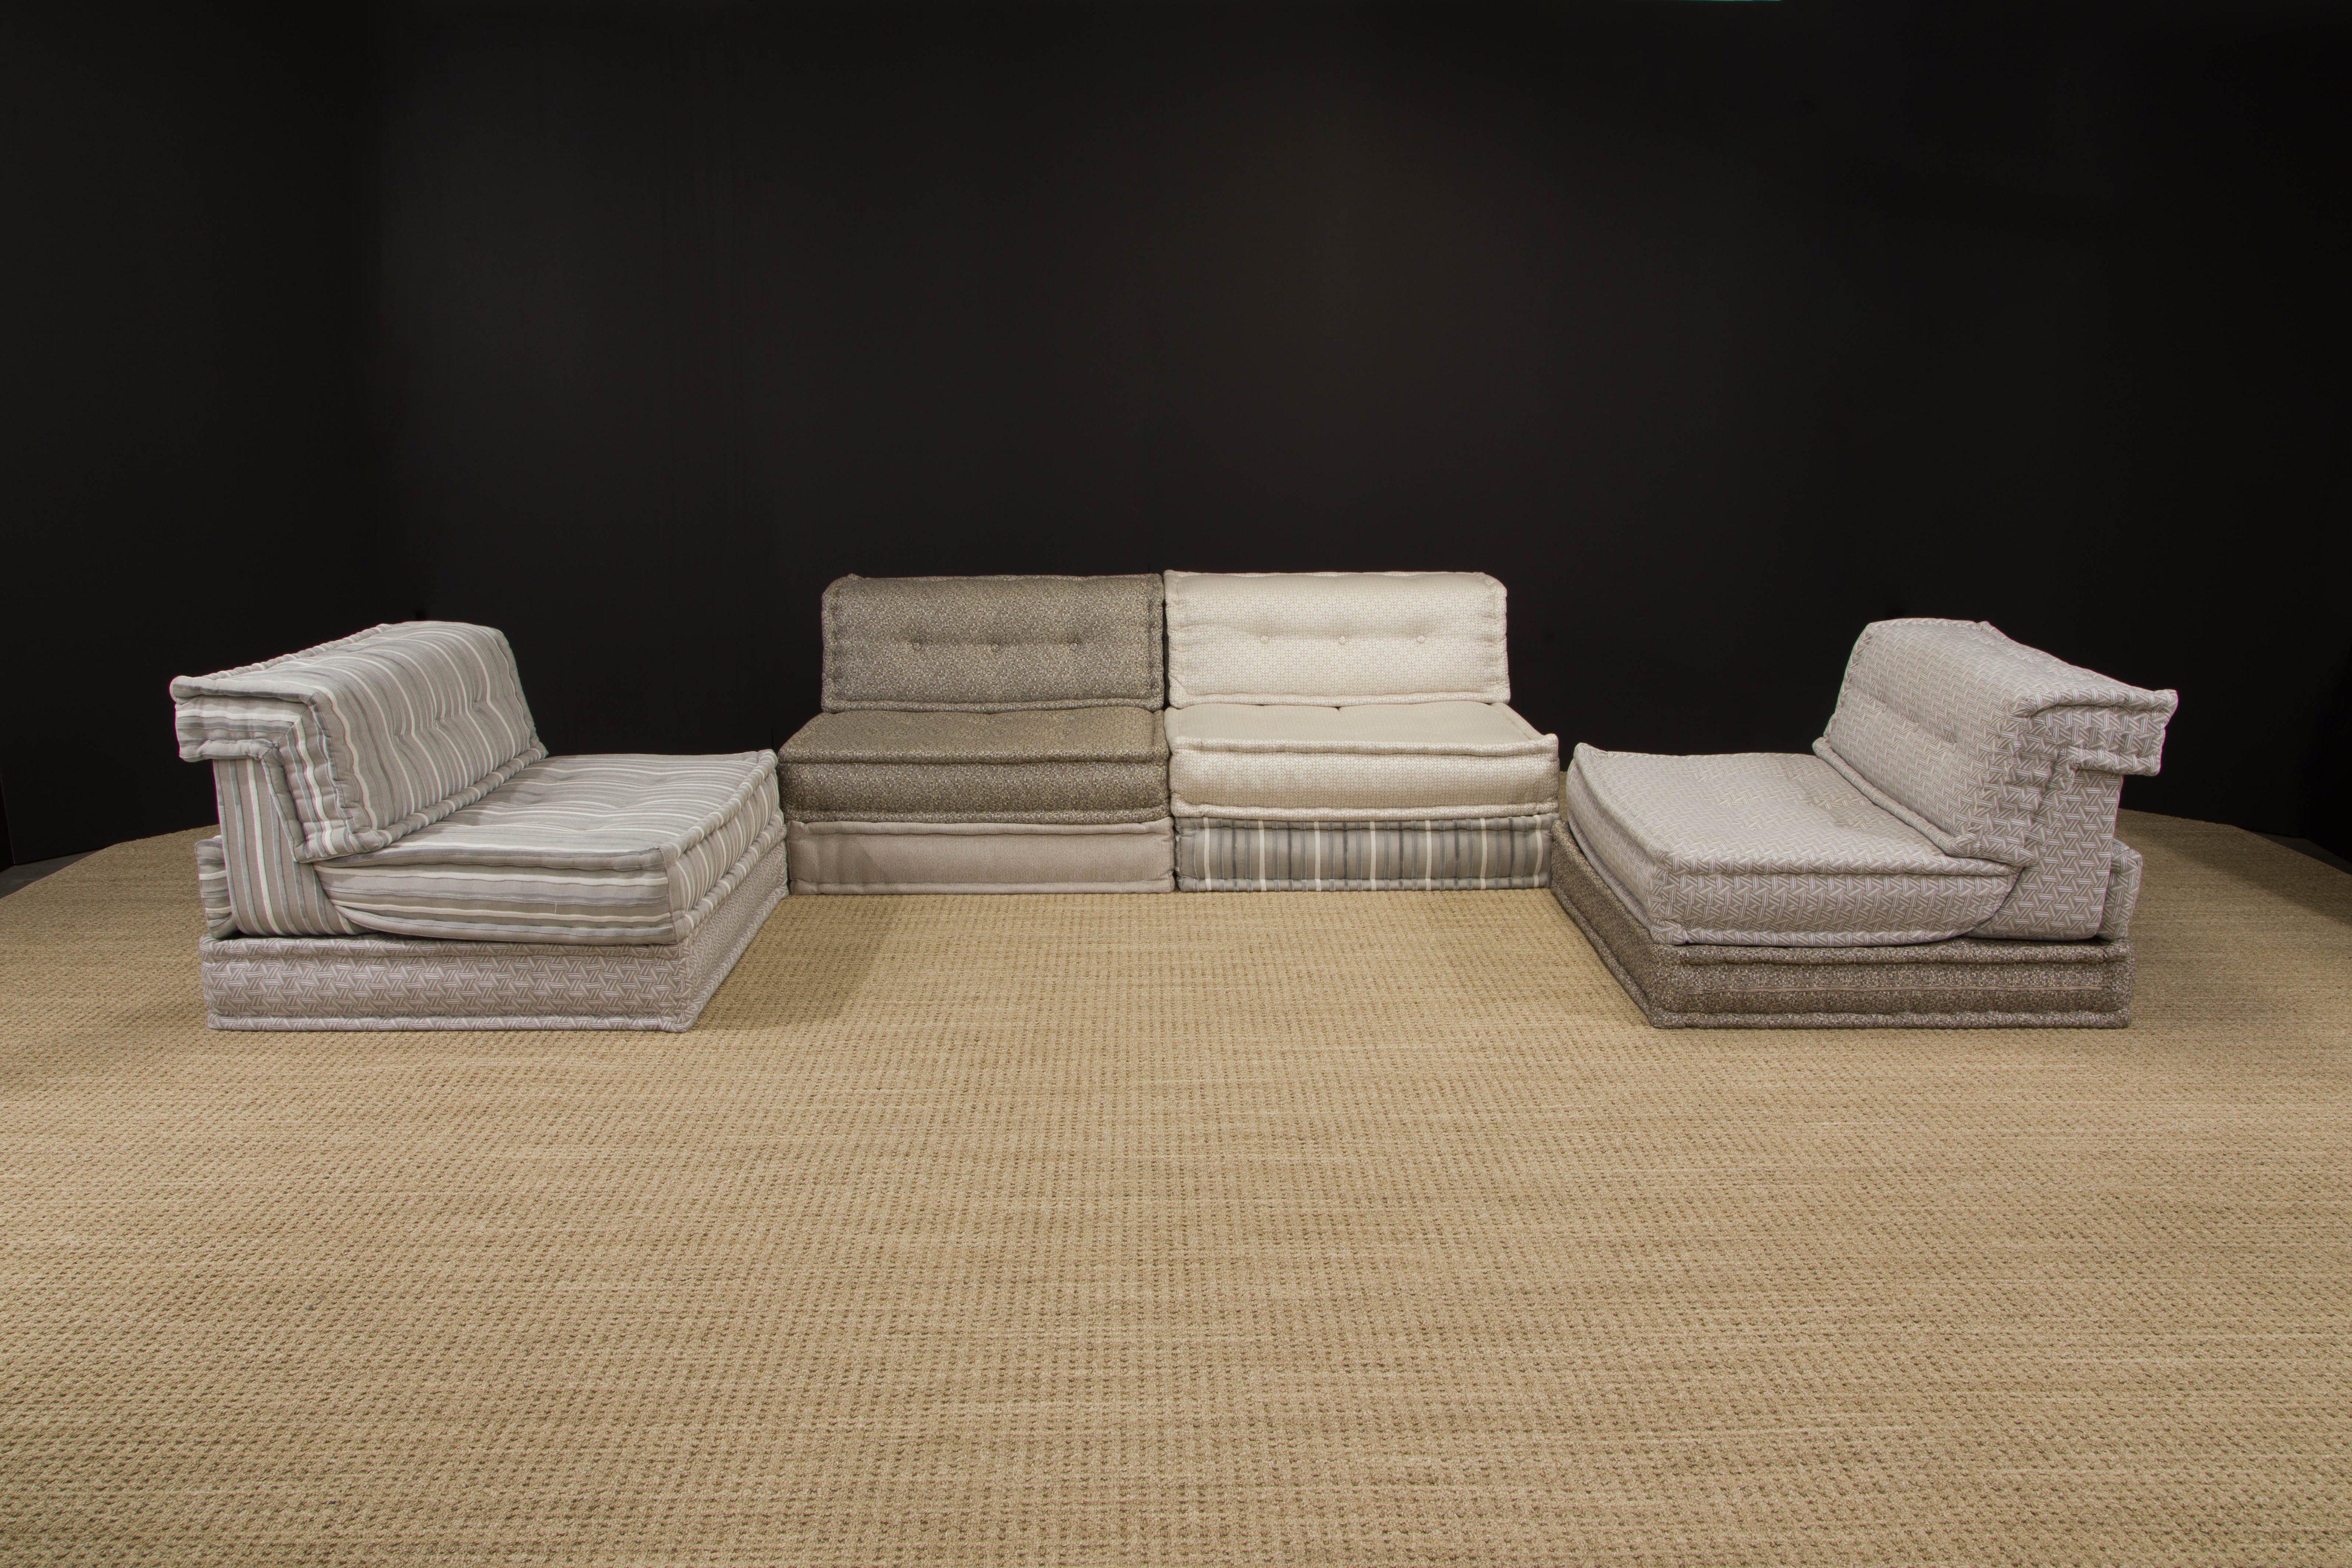 French Large 'Mah Jong' Sectional Sofa Set by Hans Hopfer for Roche Bobois, Signed 